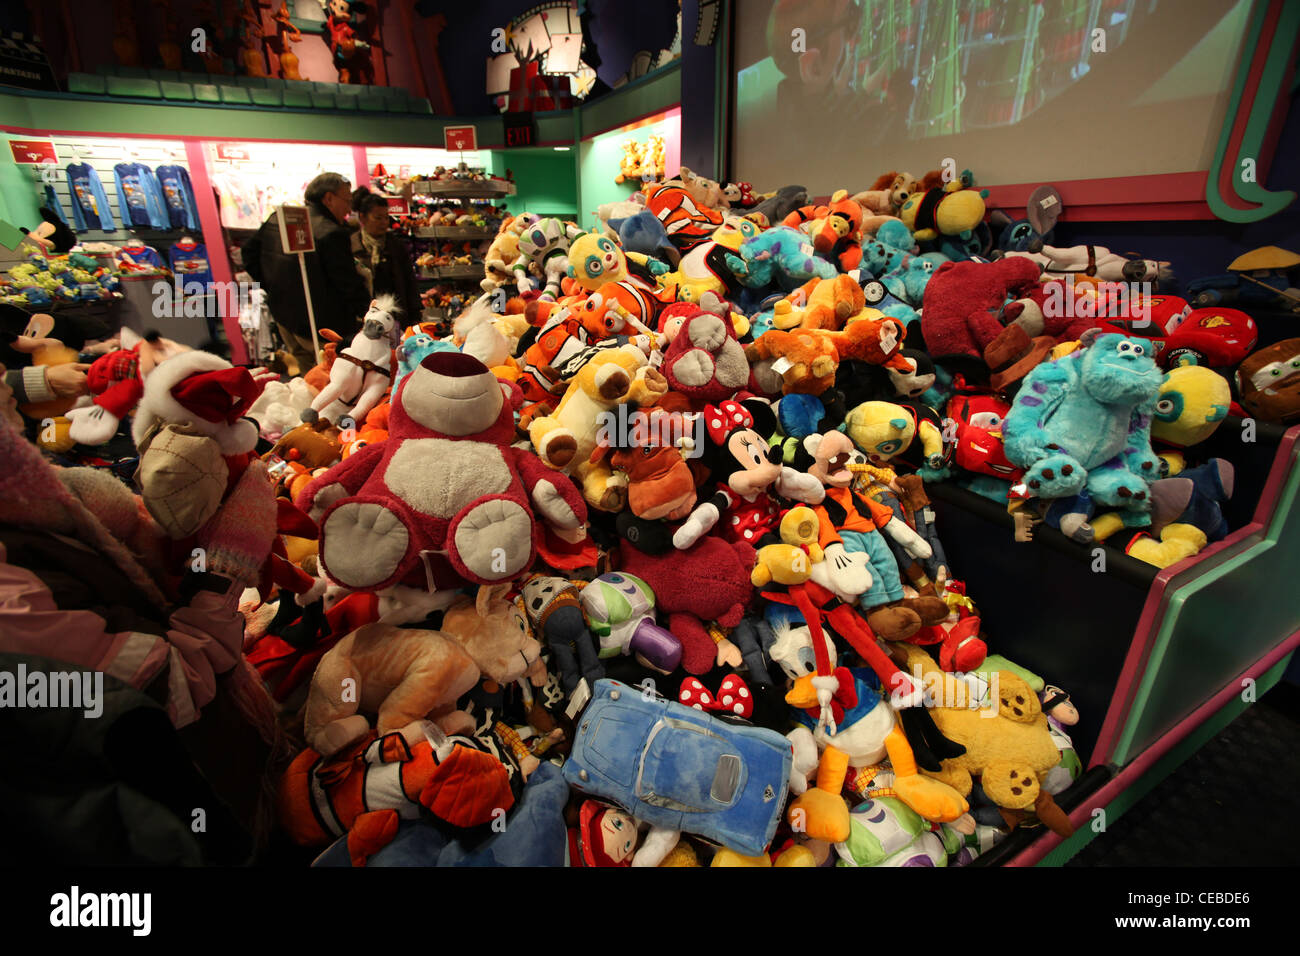 Stuffed animal in Disney store in Toronto Eaton Center Stock Photo - Alamy